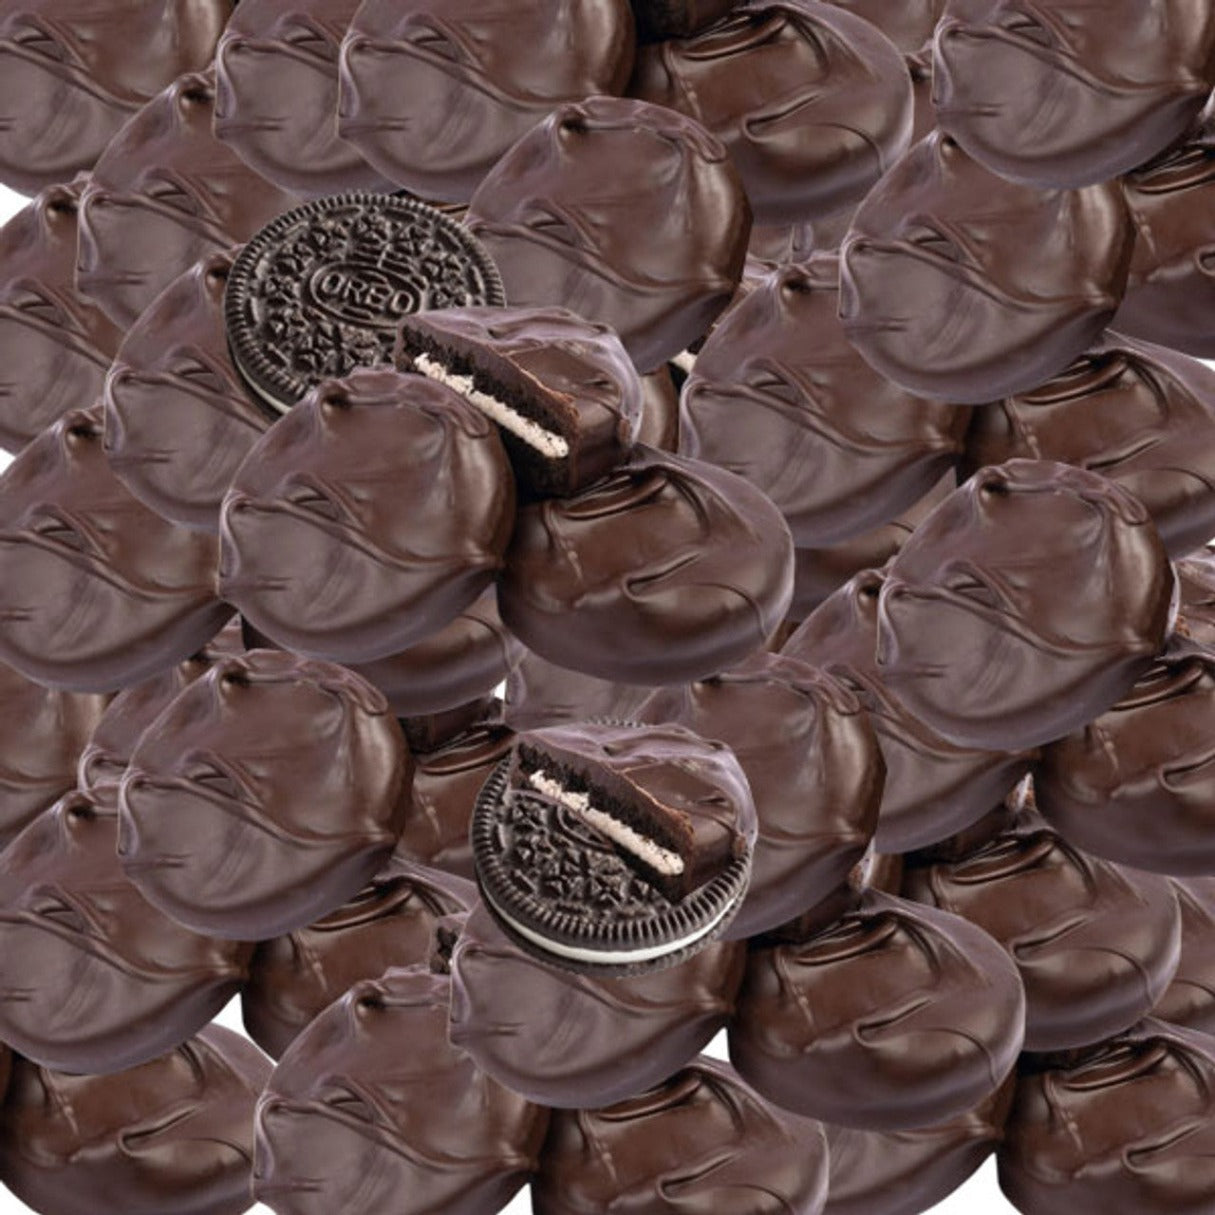 Asher's Dark Chocolate Oreo Cookies - 5lb